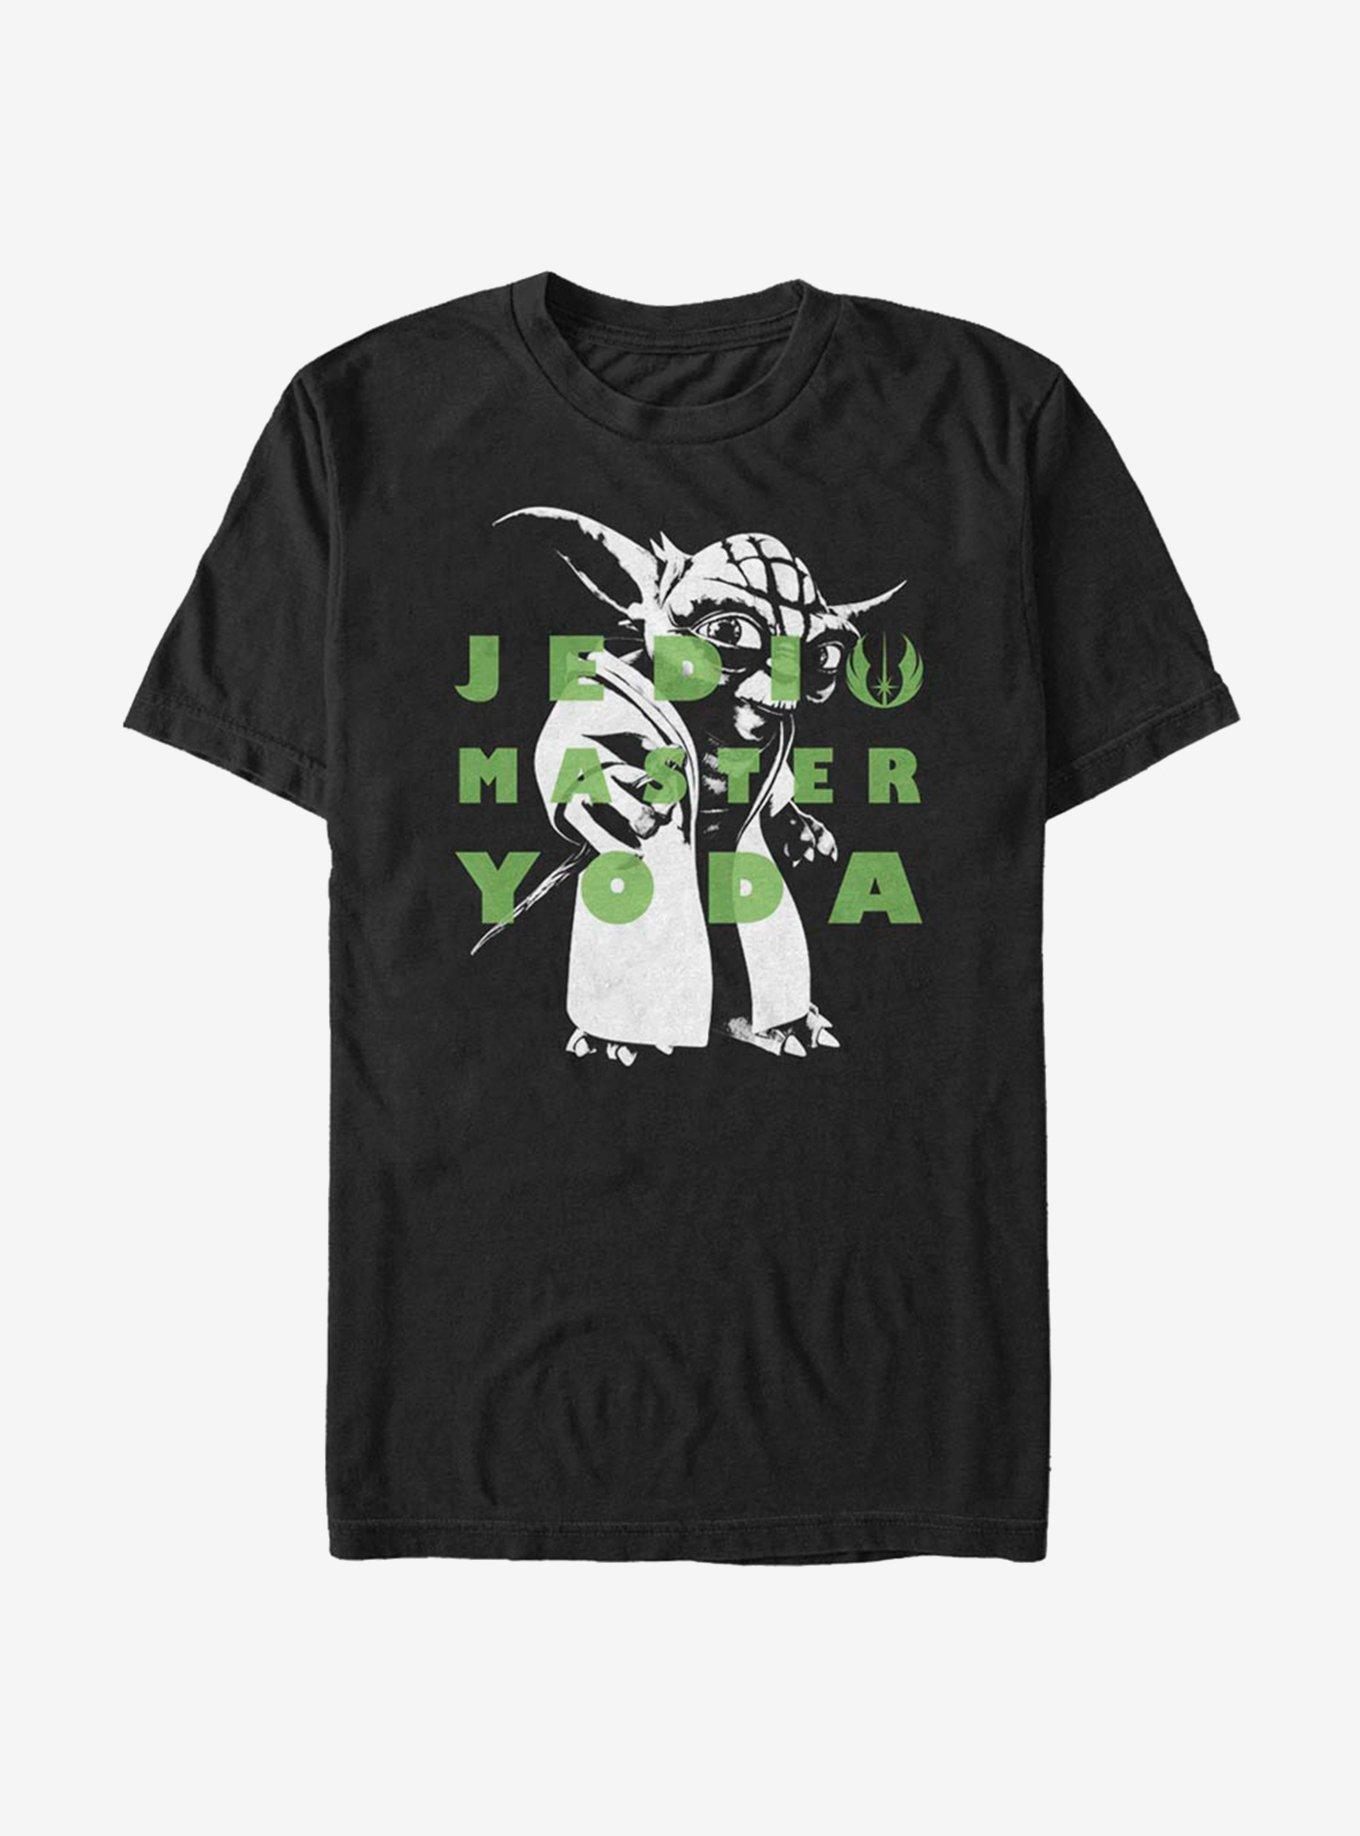 Star Wars The Clone Wars Yoda Text T-Shirt, BLACK, hi-res